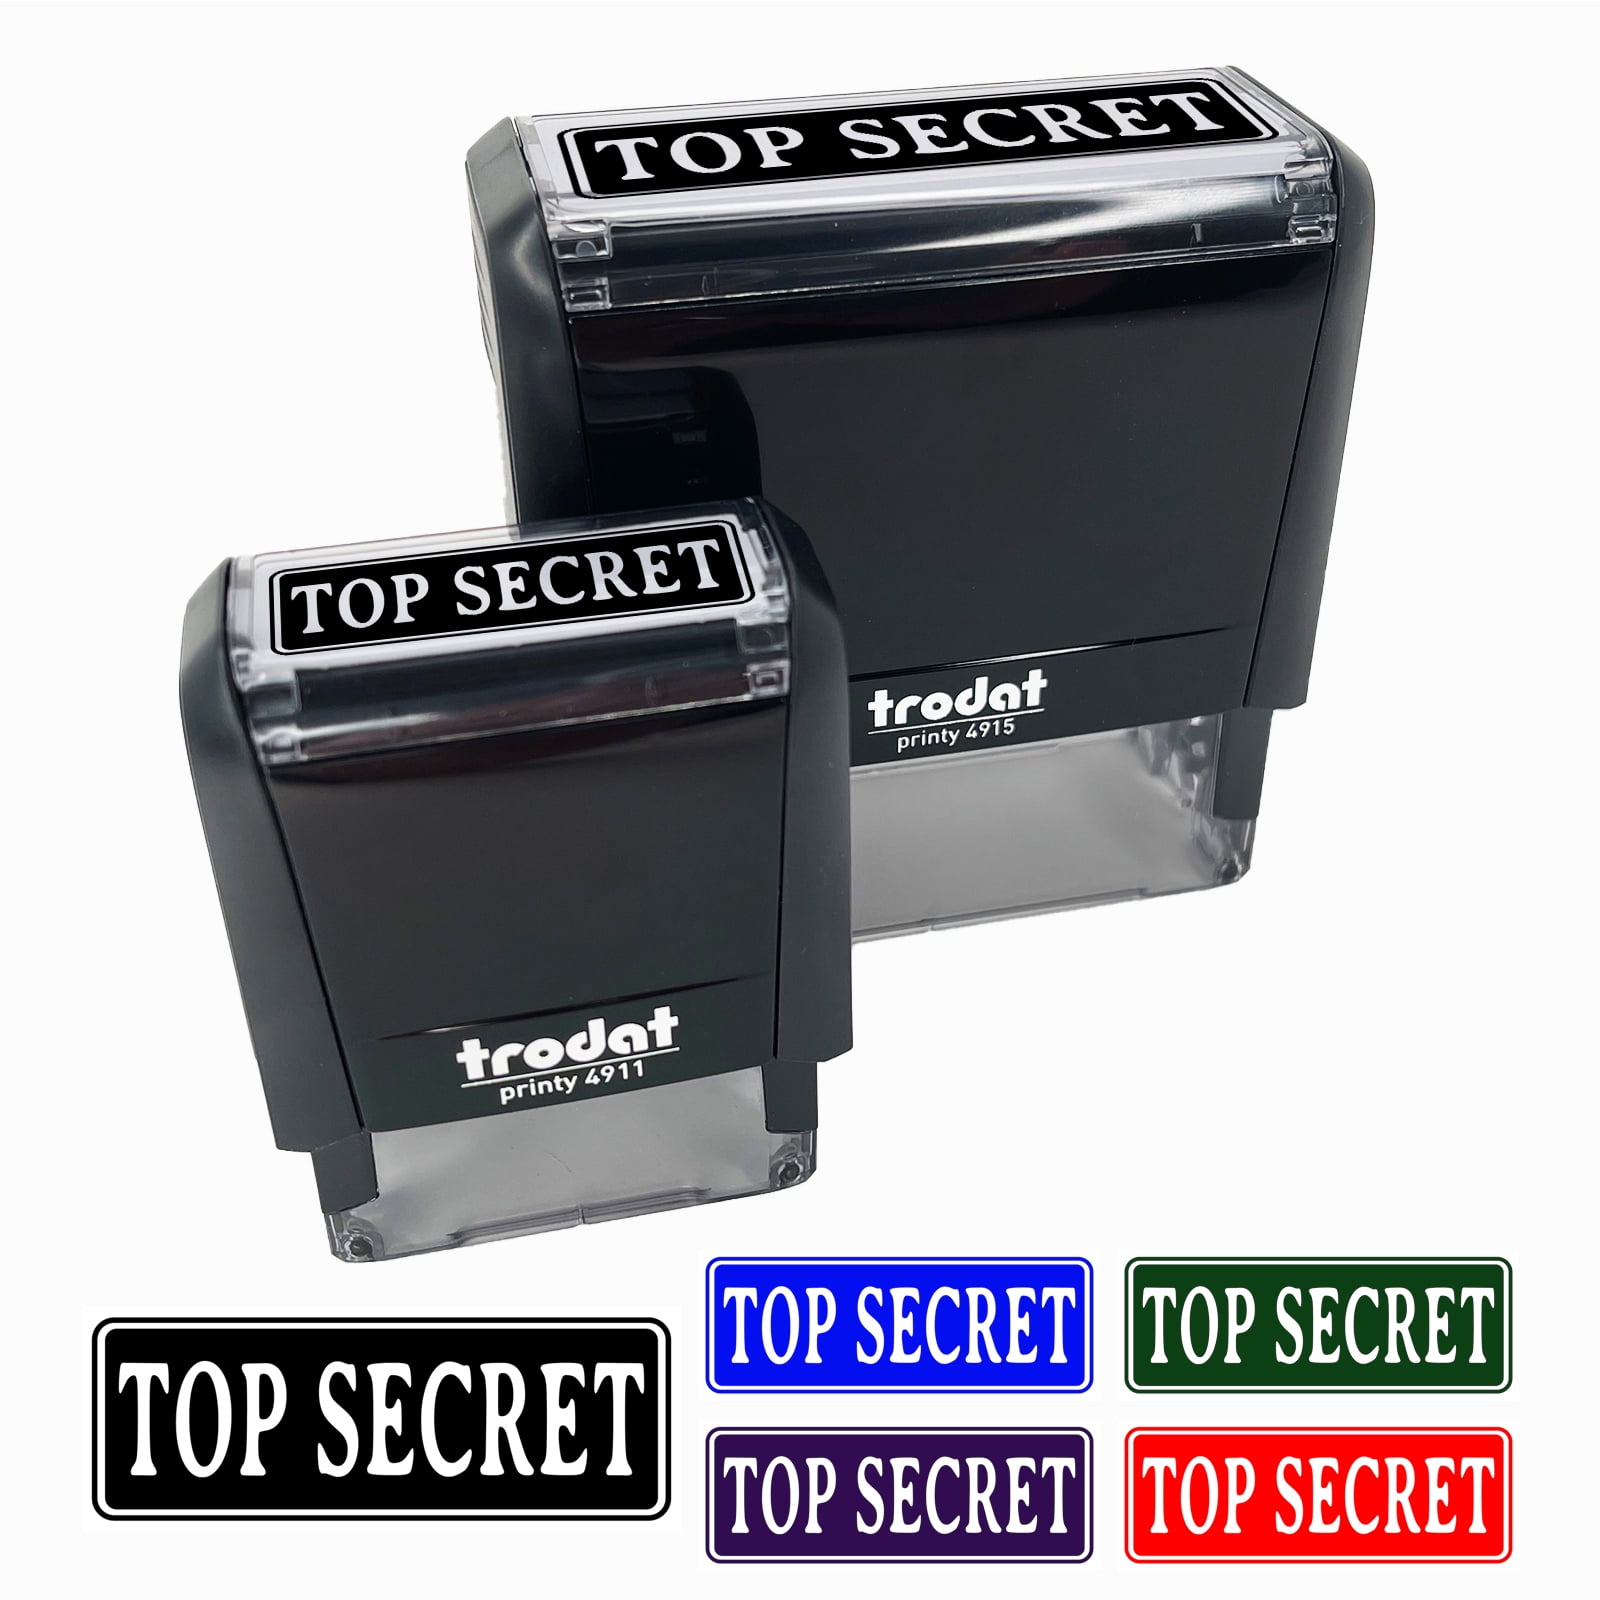 House of Marbles I-Spy Top Secret Rubber Stamp Kit Red Ink